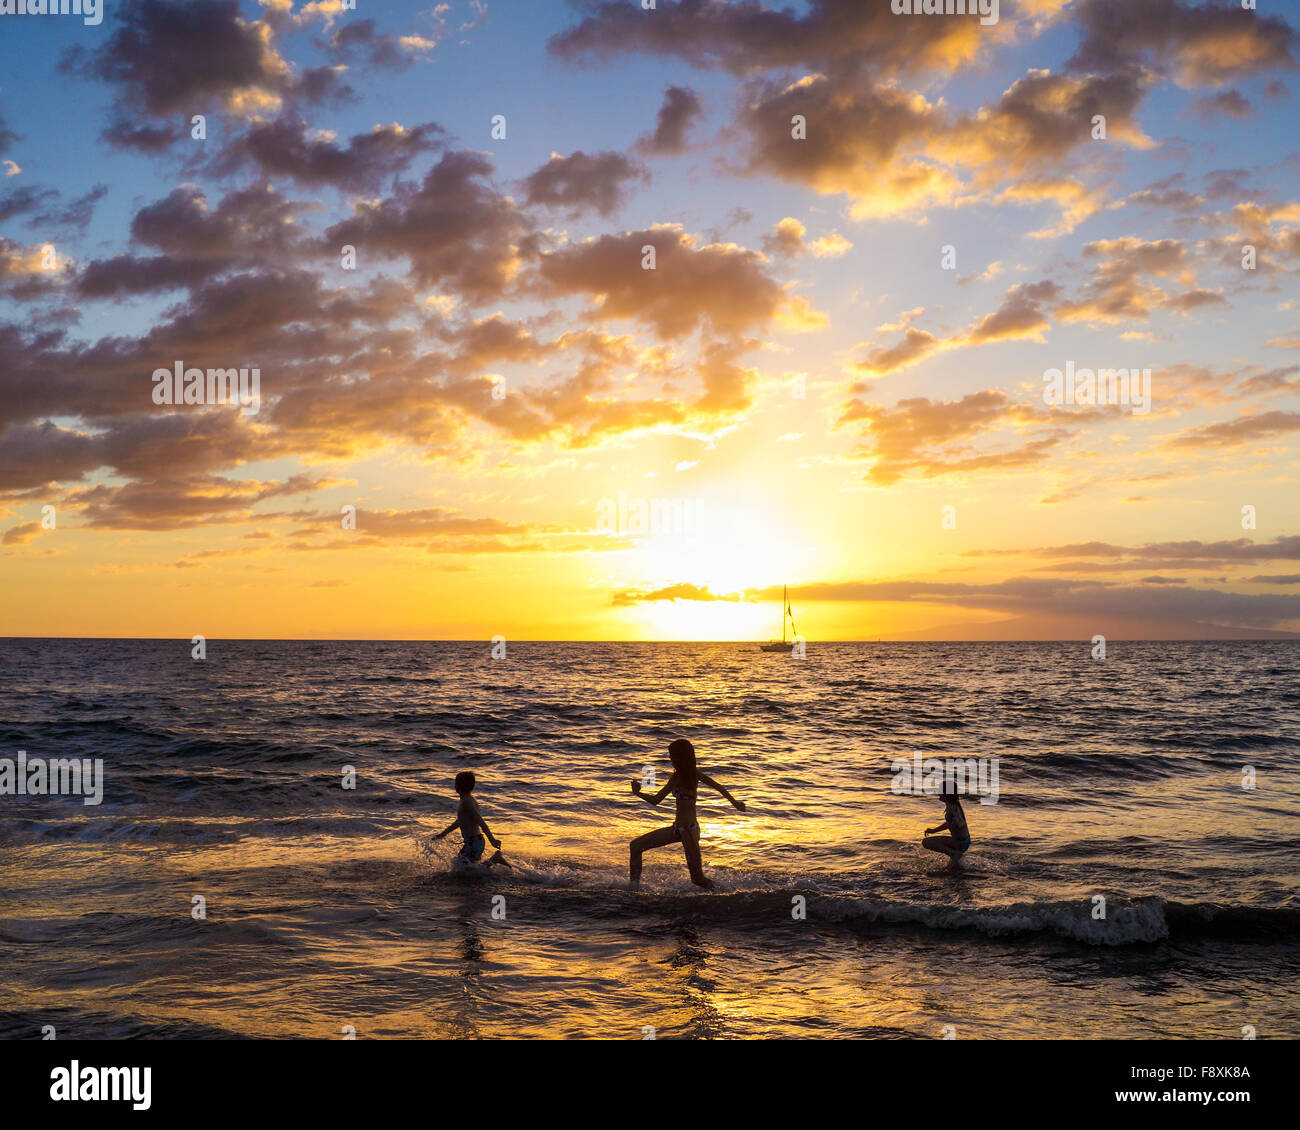 Kids in Kihei, Maui, run in the surf at sunset Stock Photo